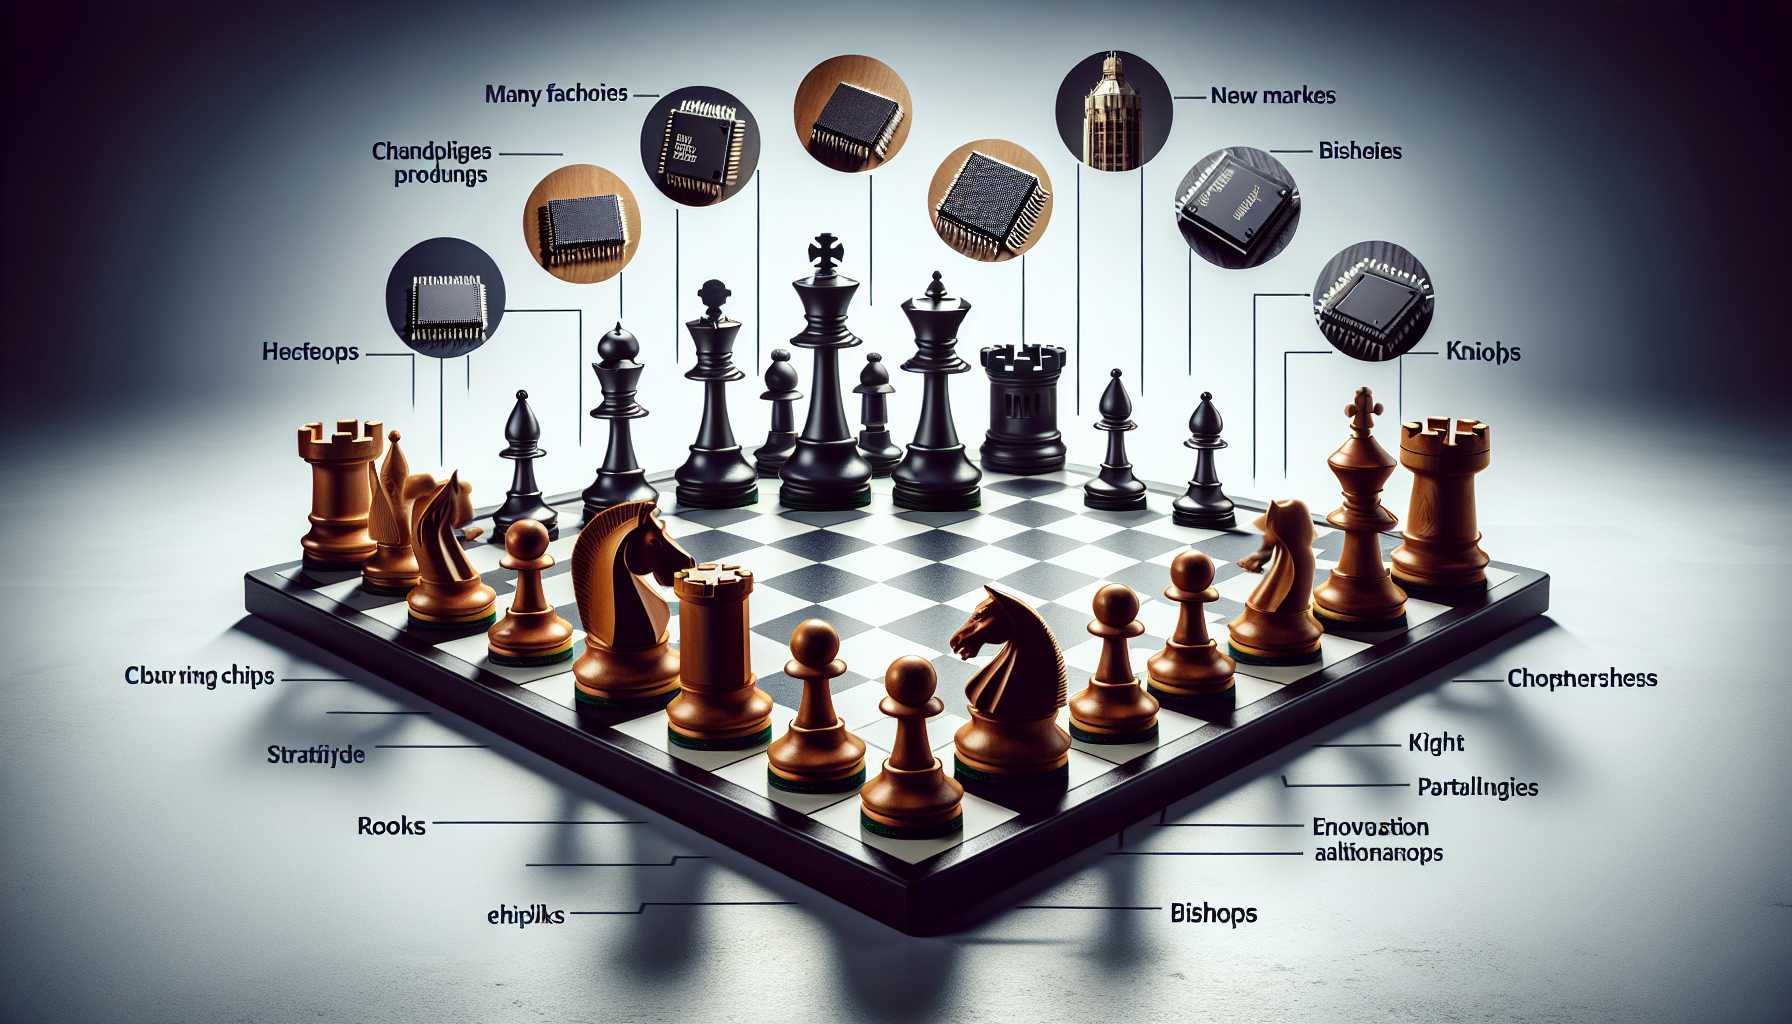 a strategic game of chess representing TSMC's chipmaking strategies